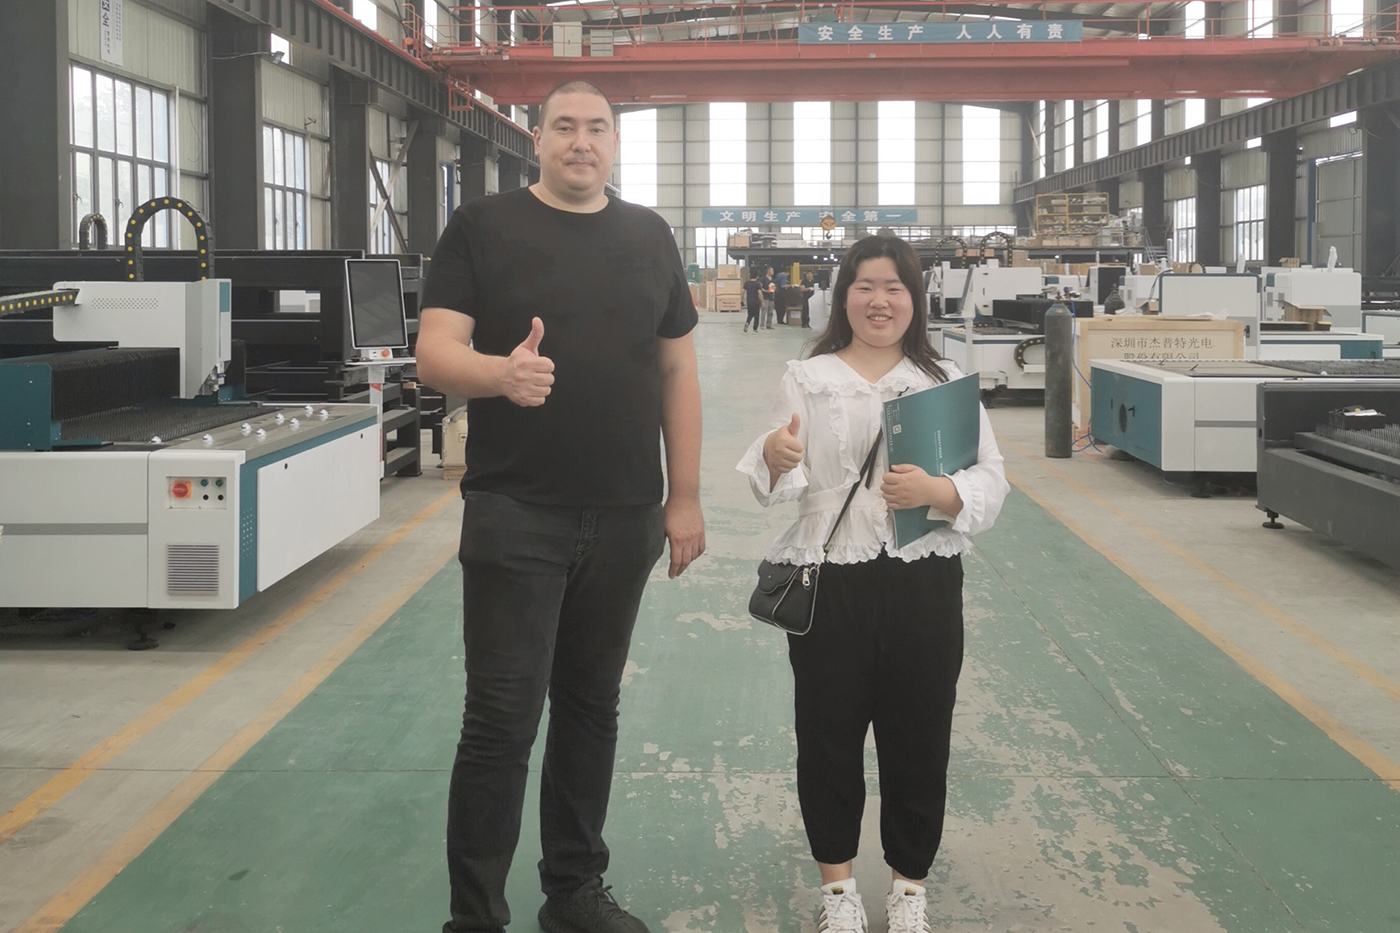 Russian friends help Kazakh customers visit the factory 2